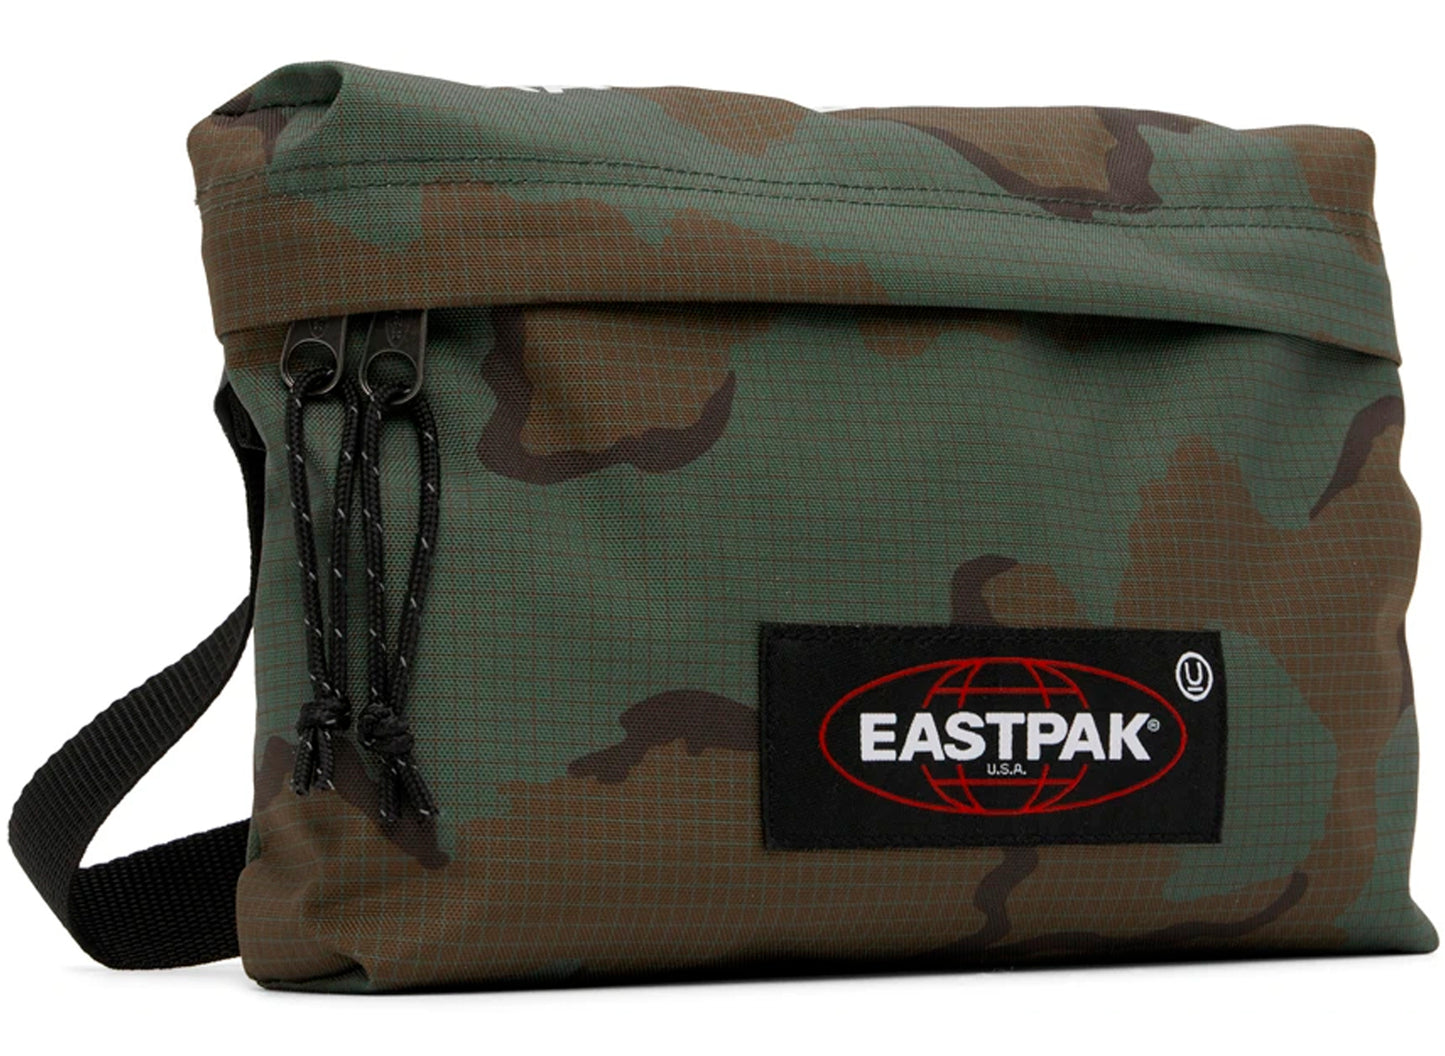 Eastpak x Undercover Crossbody Bag in Green Camo